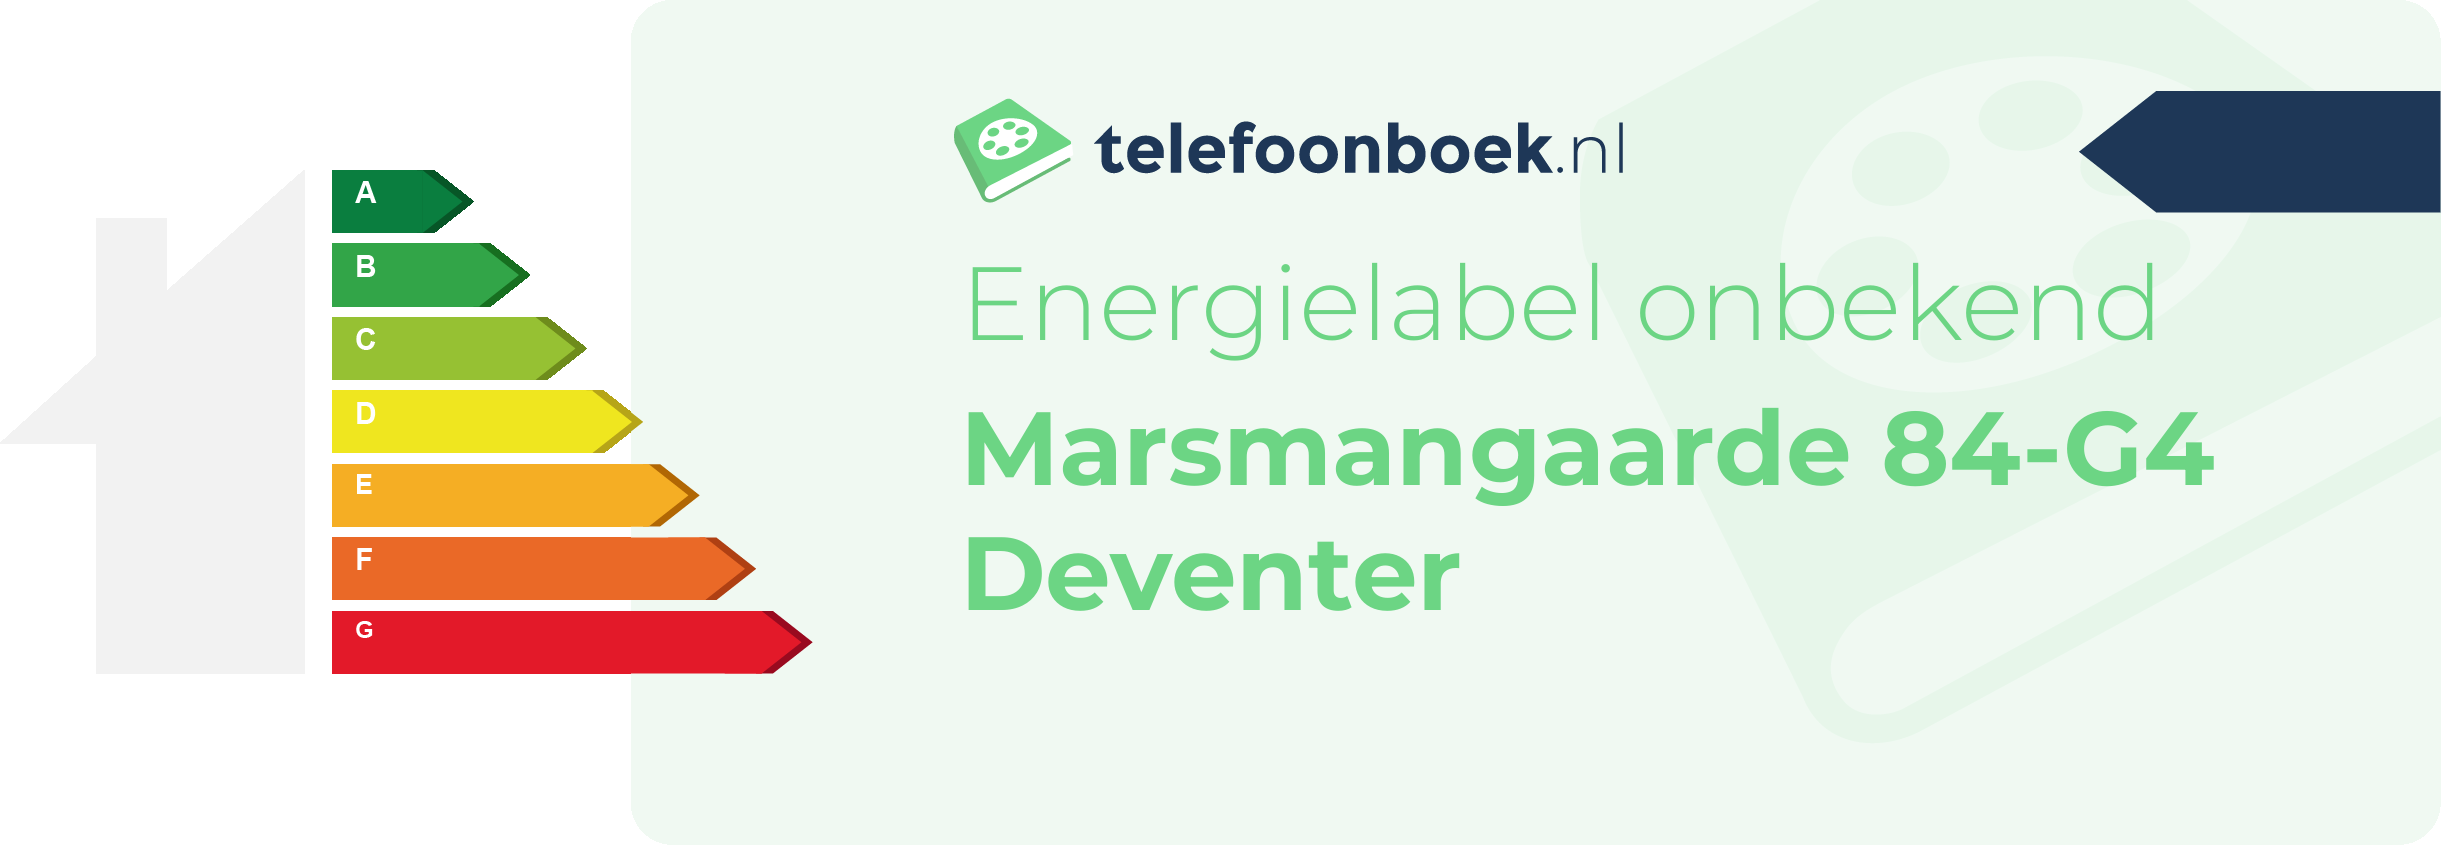 Energielabel Marsmangaarde 84-G4 Deventer